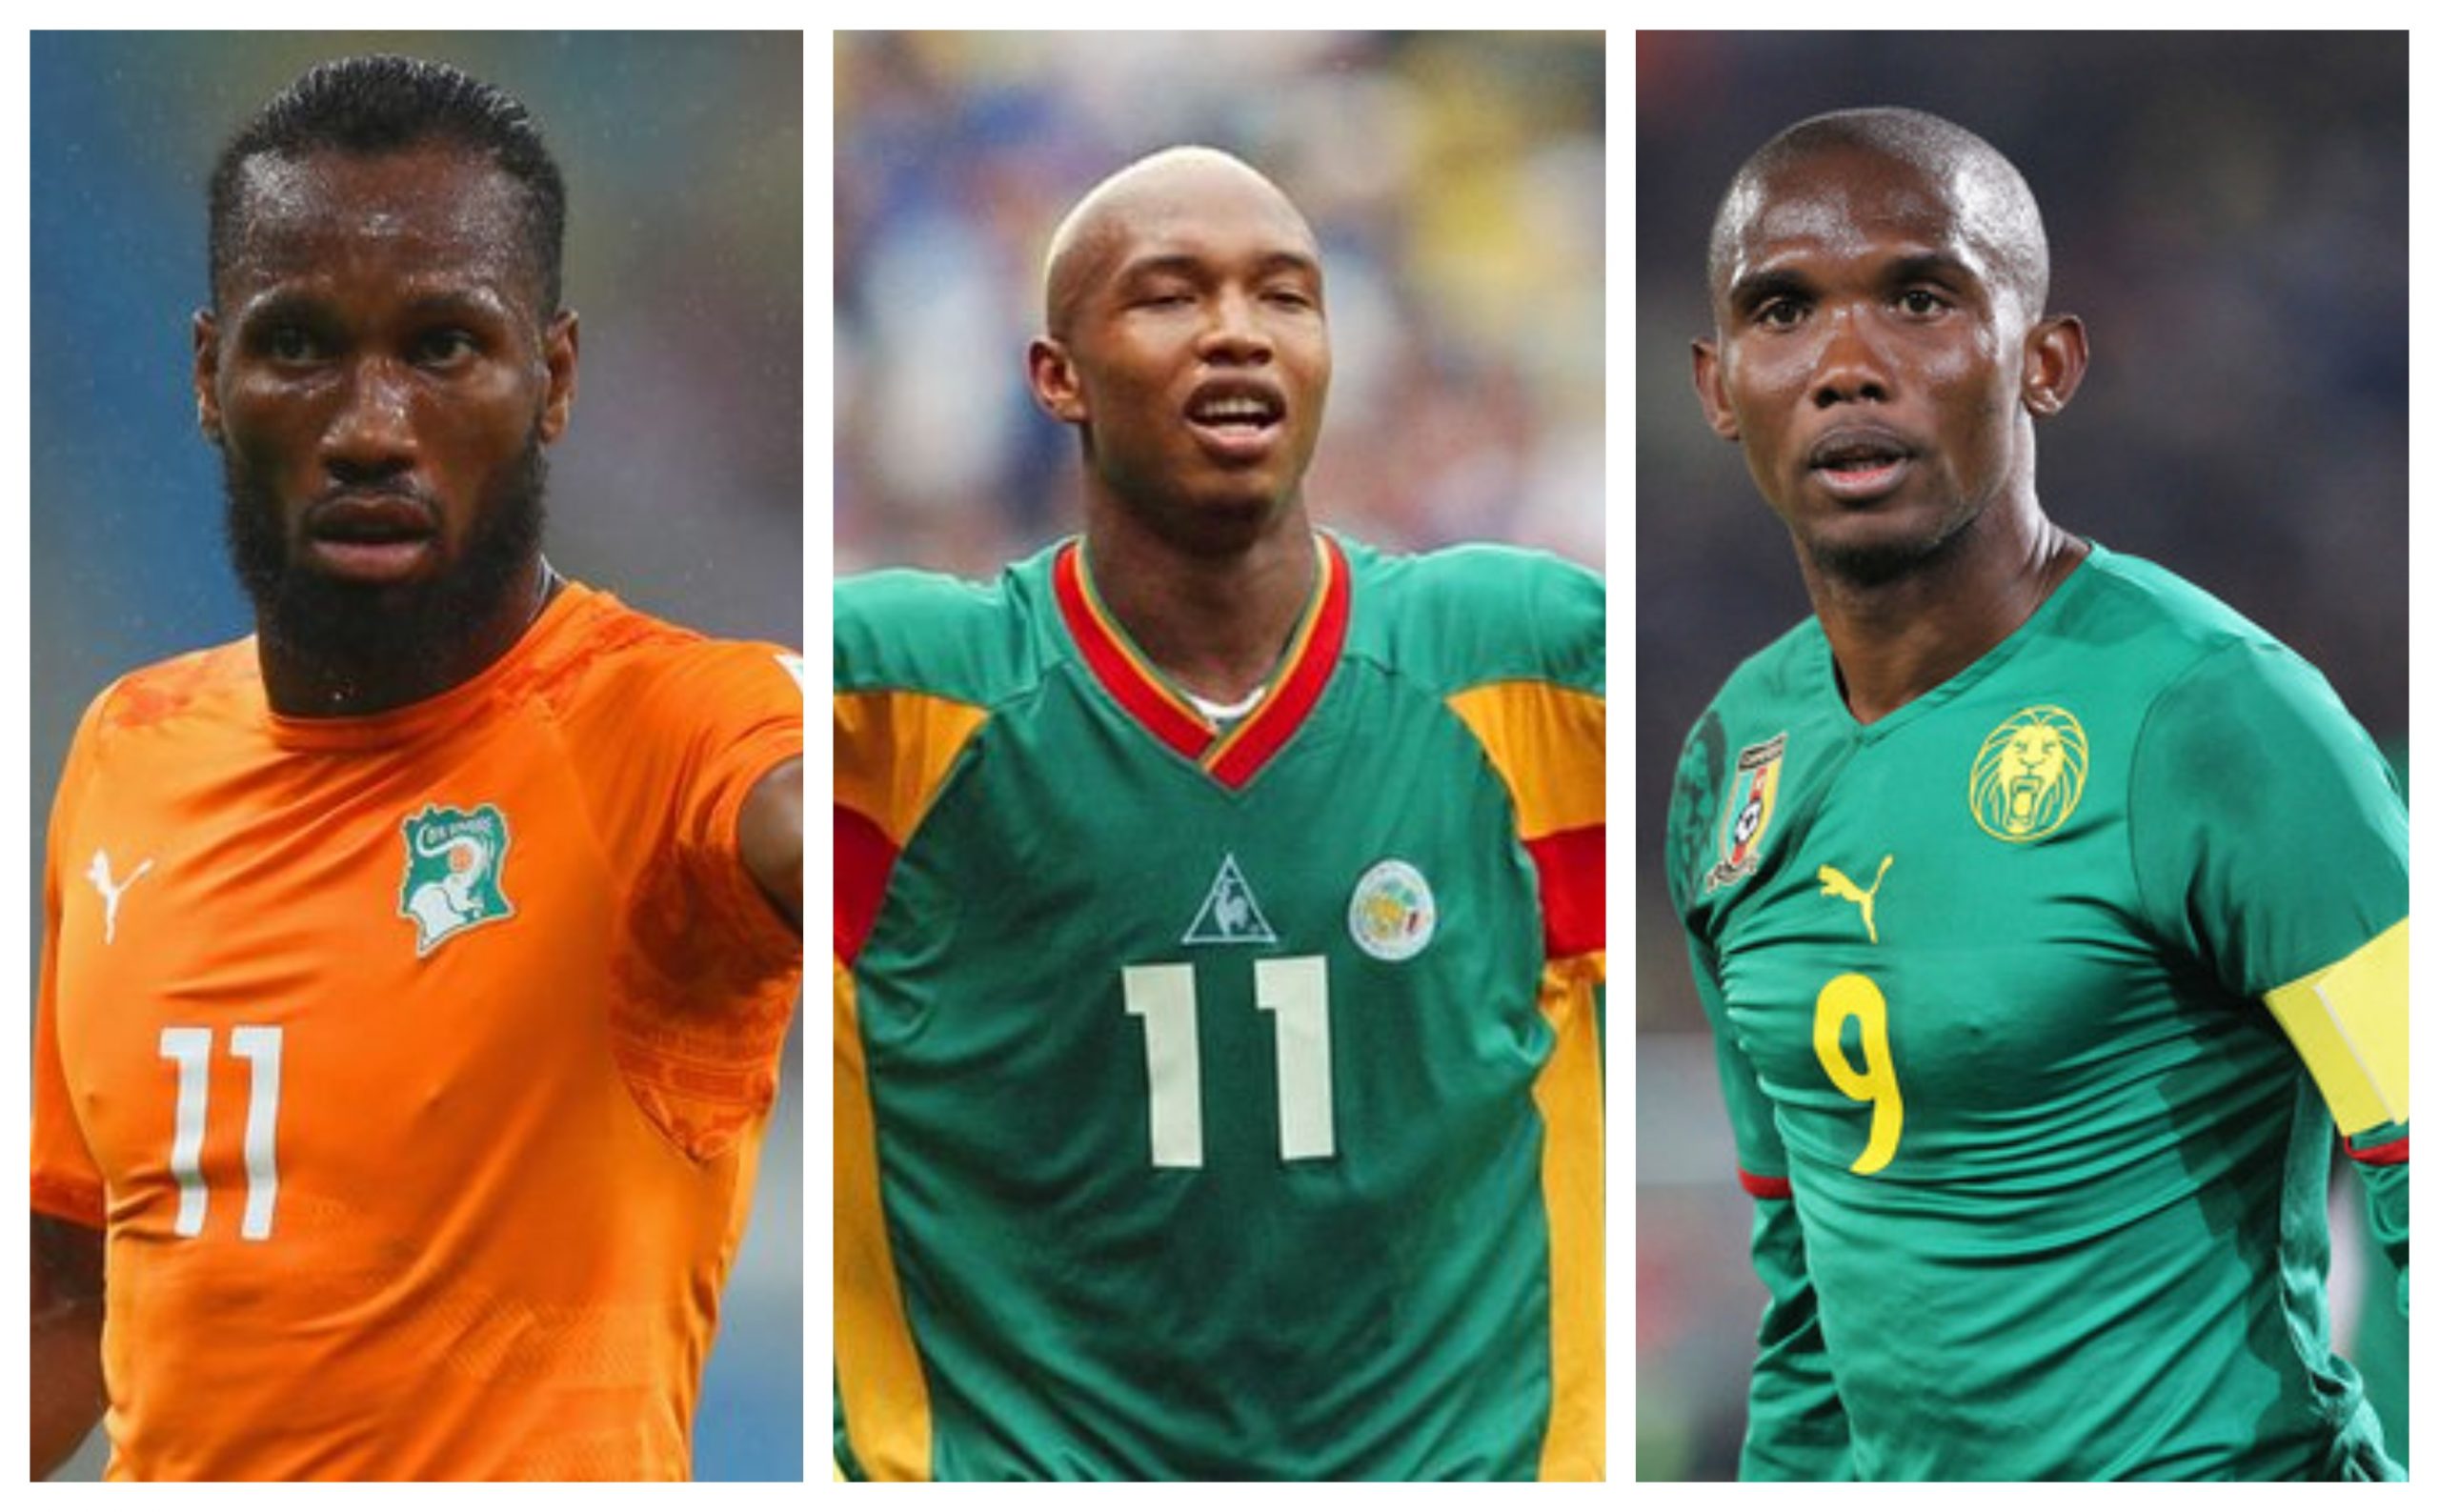 El Hadji Diouf plus talentueux que Drogba et Eto’o ? Les internautes d’AfriqueSports sont divisés